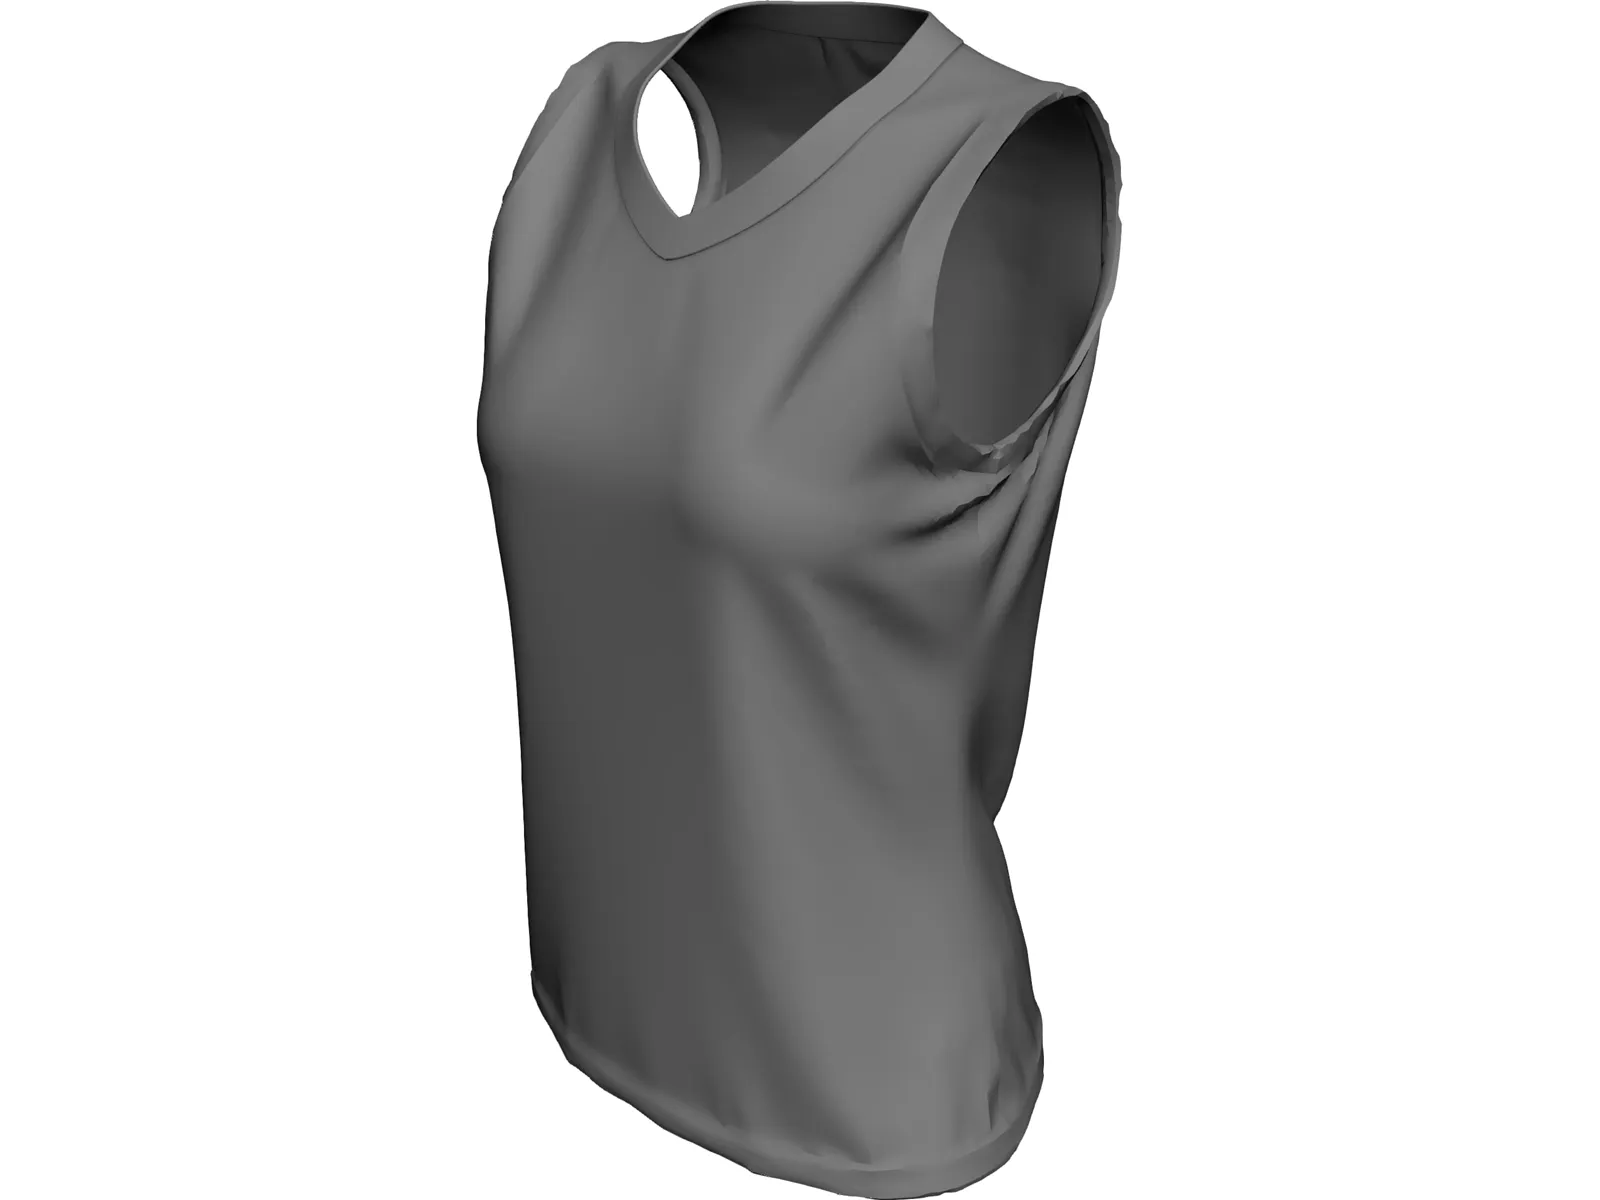 Volleyball Jersey 3D Model - 3DCADBrowser